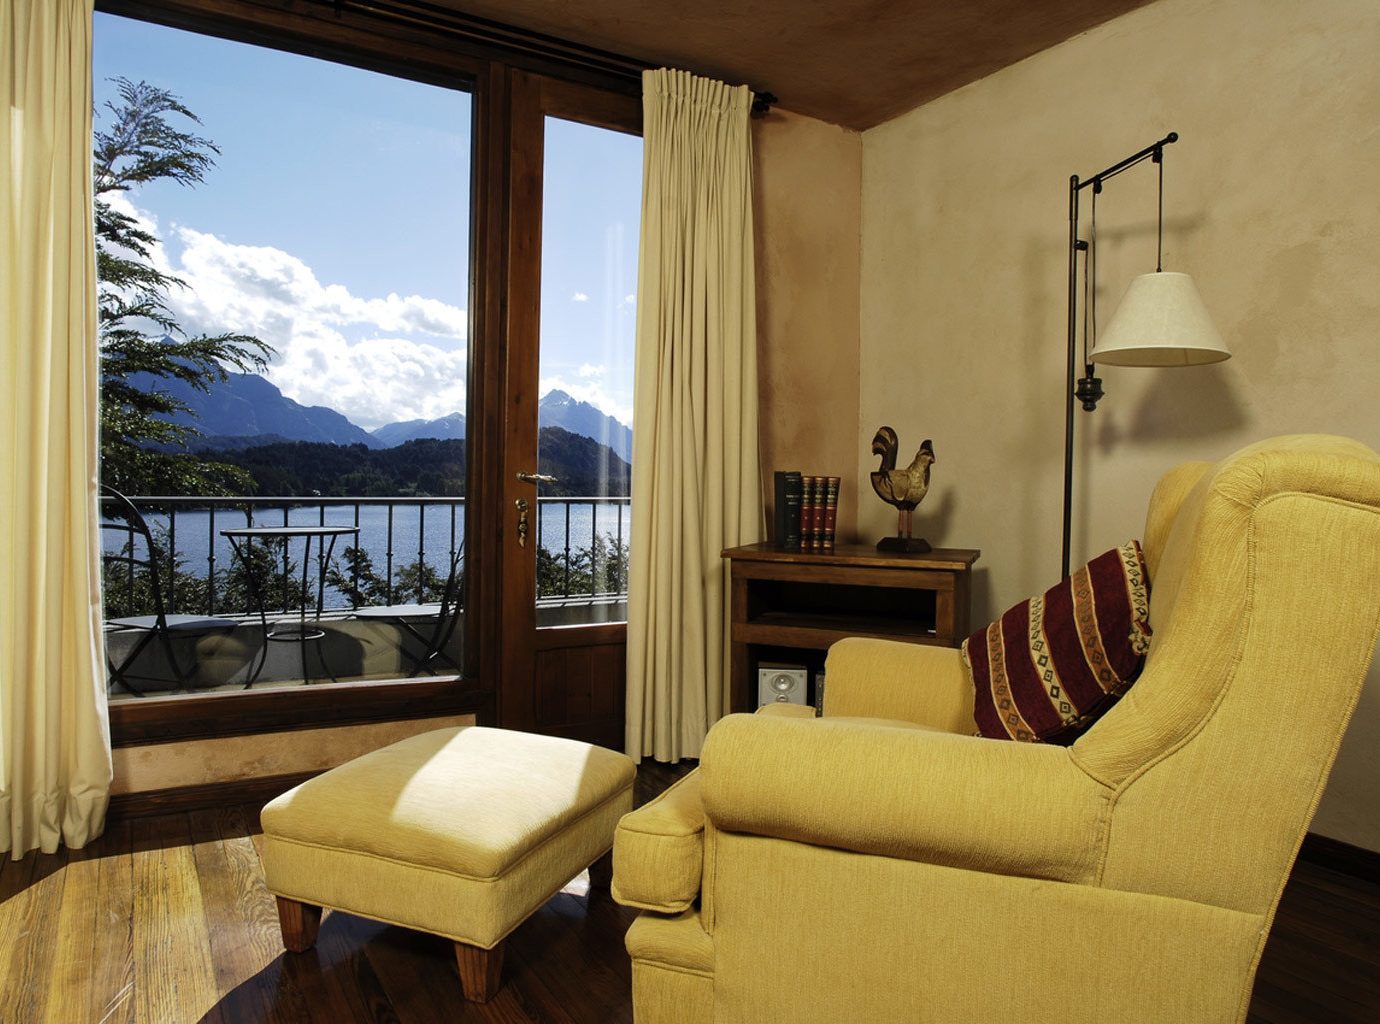 Balcony Bedroom Classic Scenic views sofa property living room house home Suite cottage Villa condominium